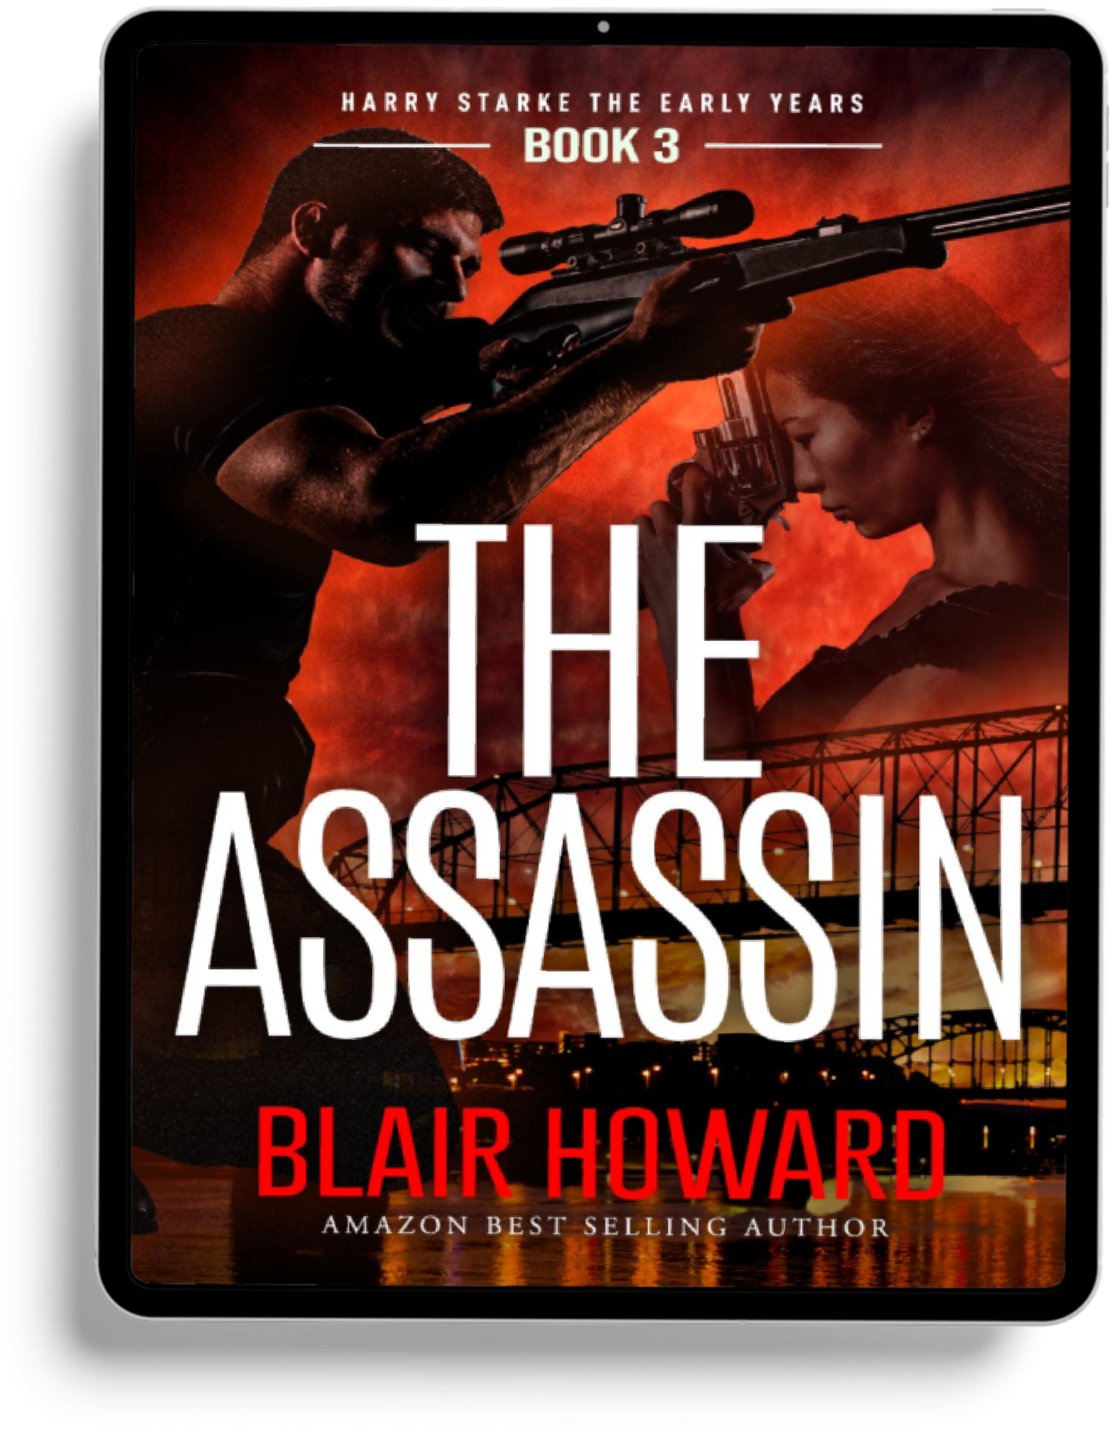 The Assassin (Harry Starke Genesis Book 3)